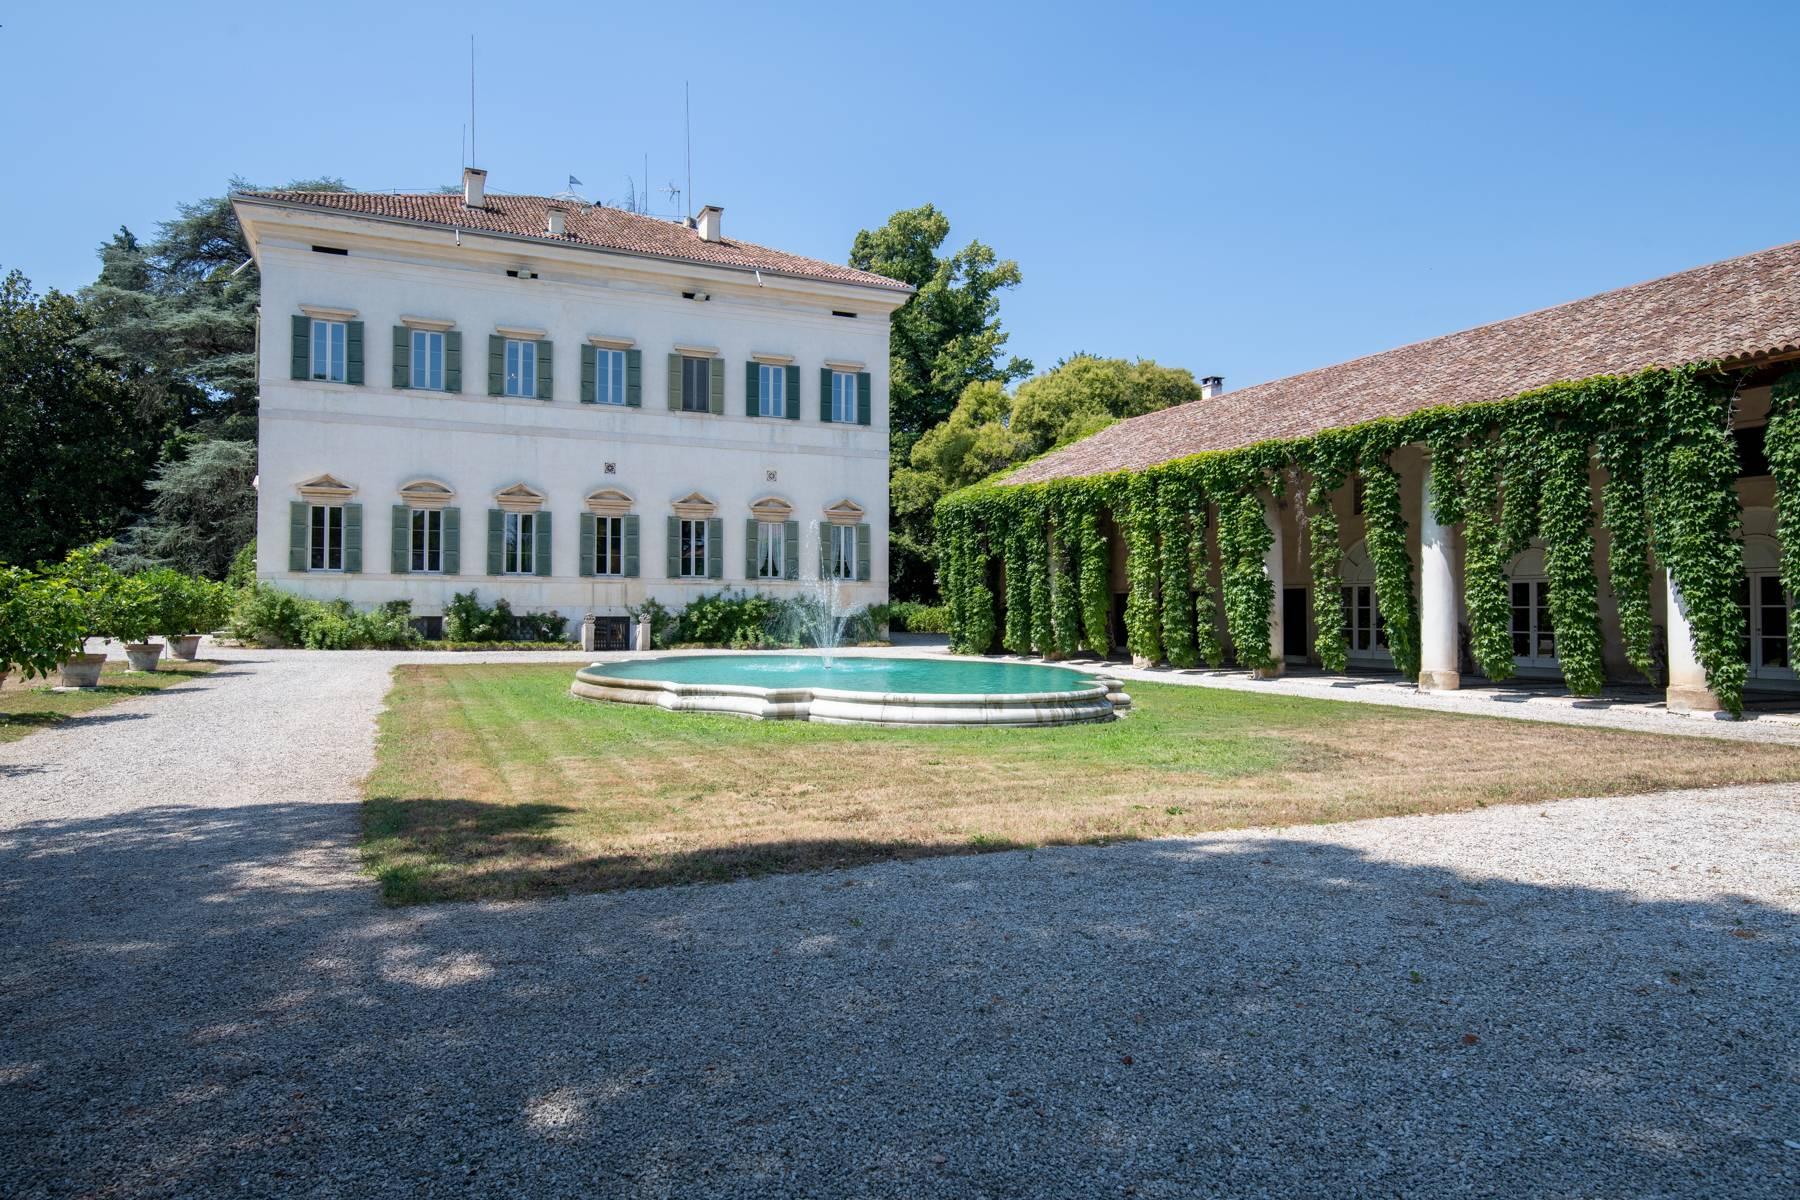 Elegante Villa Veneta con parco romantico e adiacenze - 2